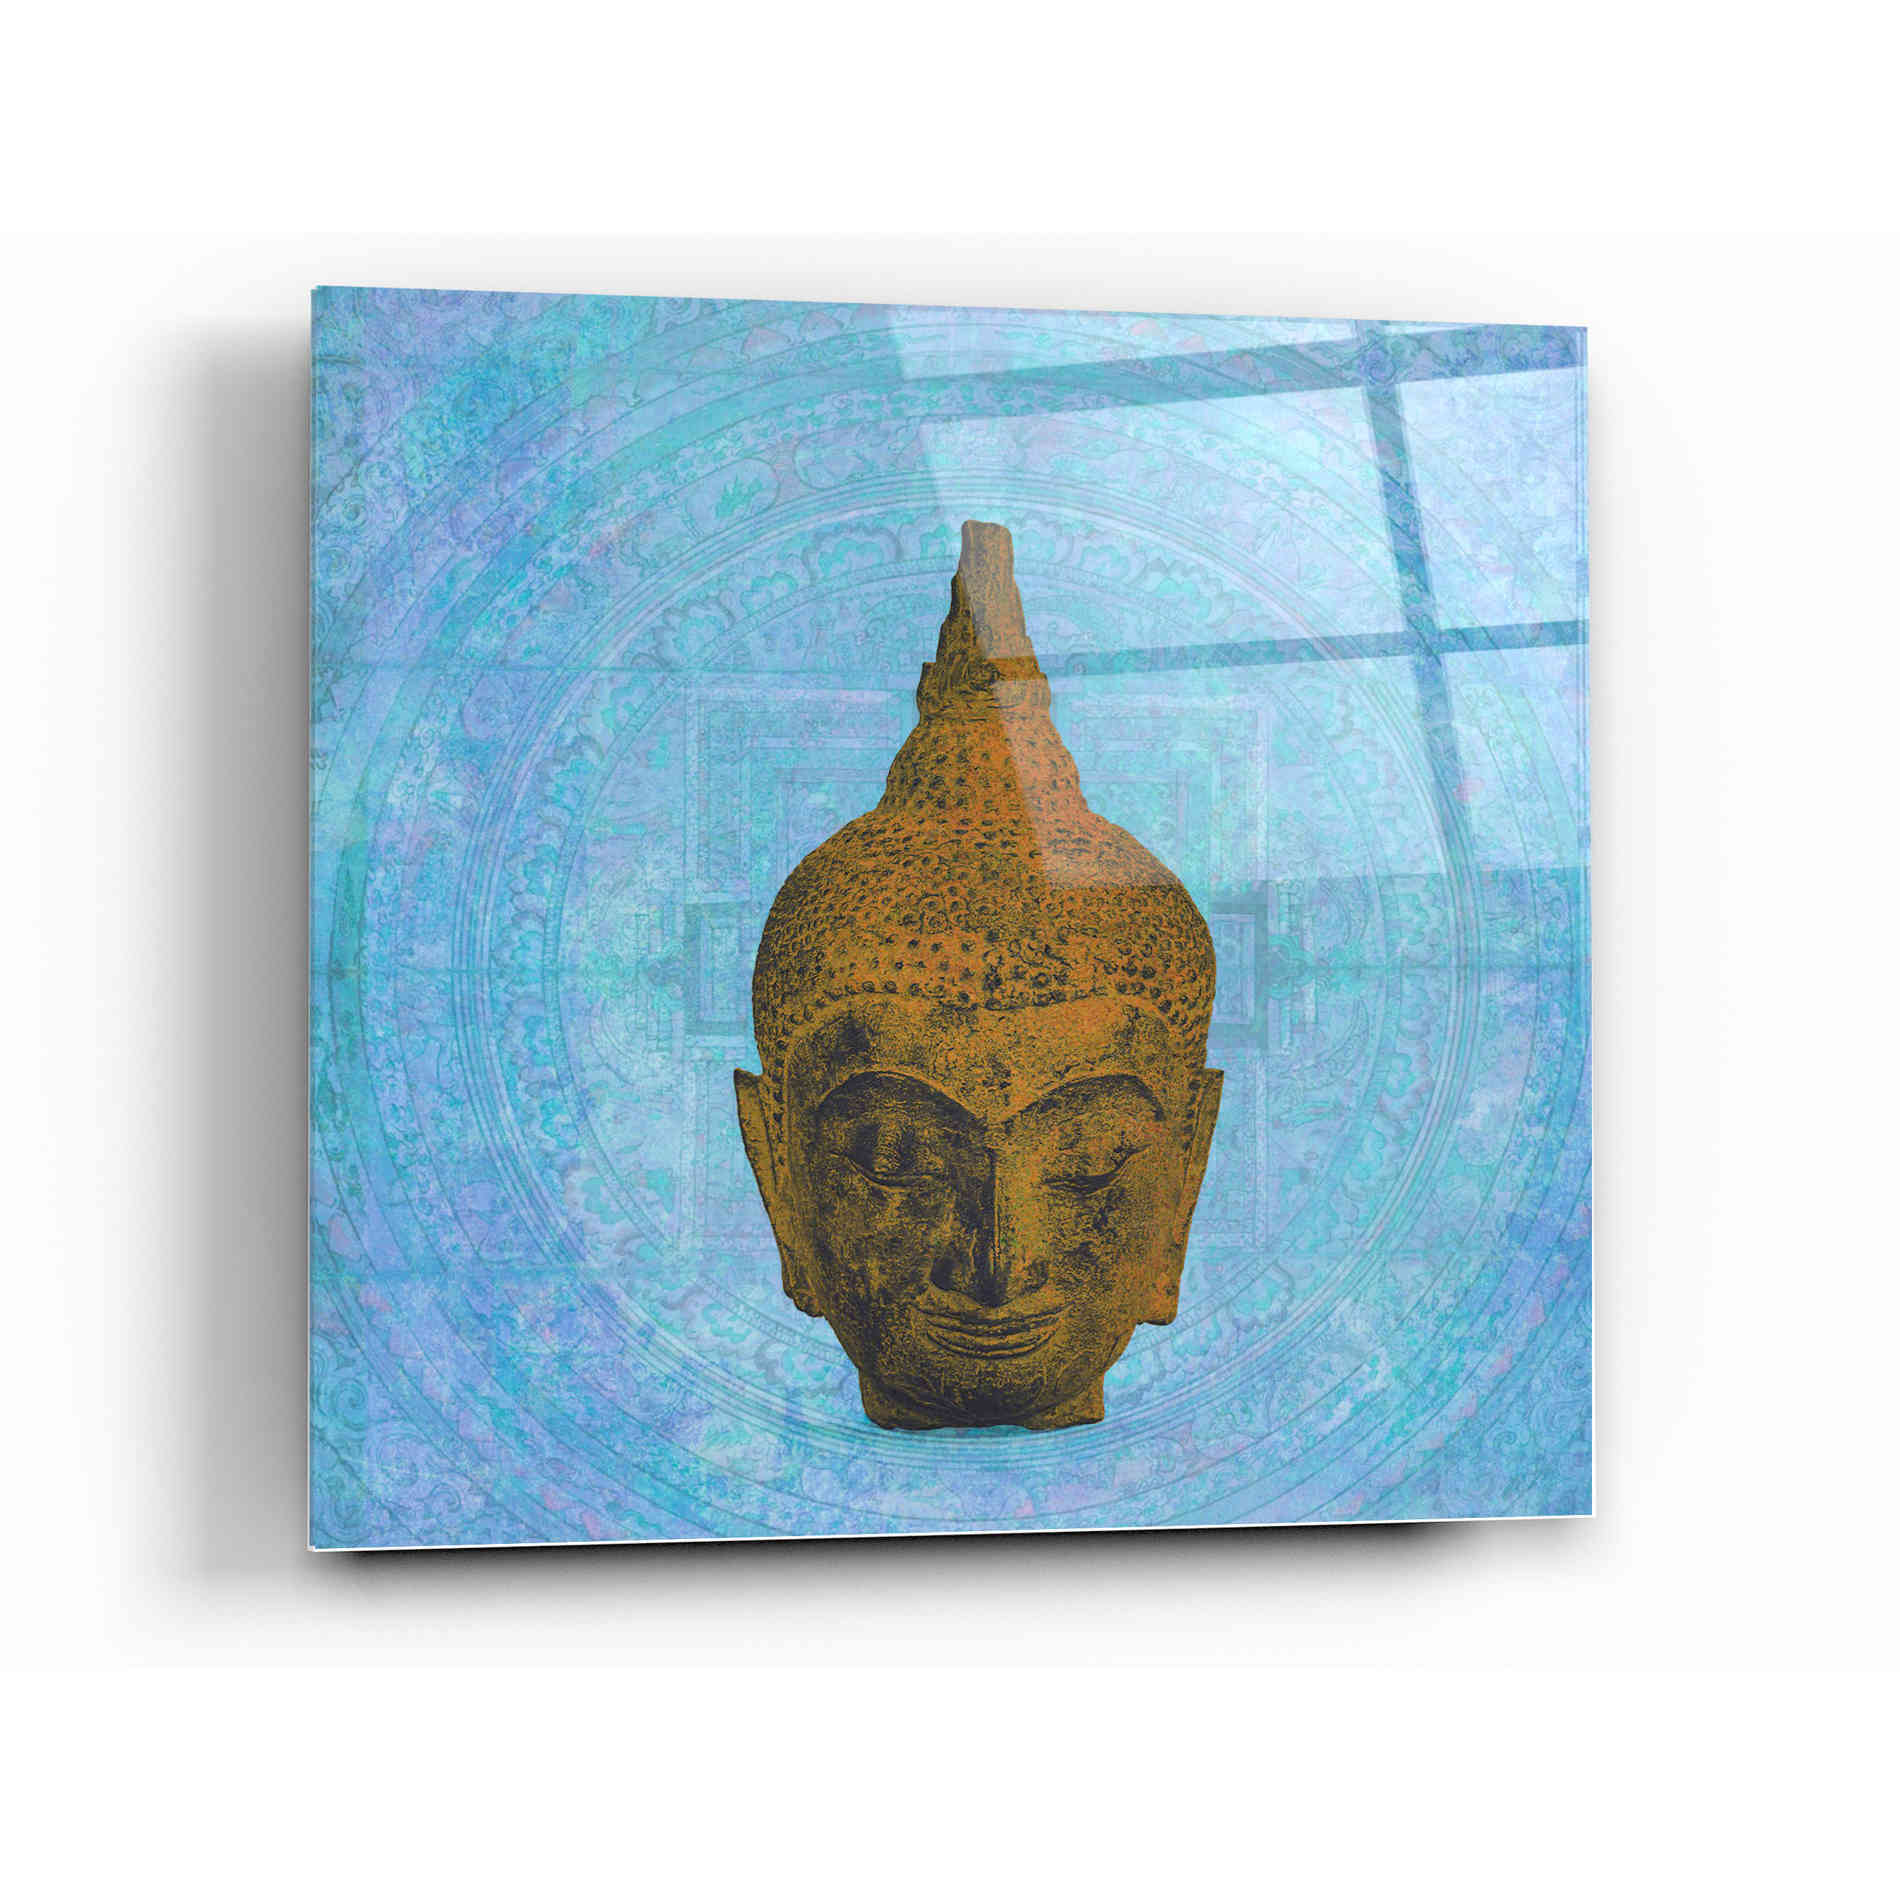 Epic Art 'Buddha on Blue' by Elena Ray Acrylic Glass Wall Art,12x12